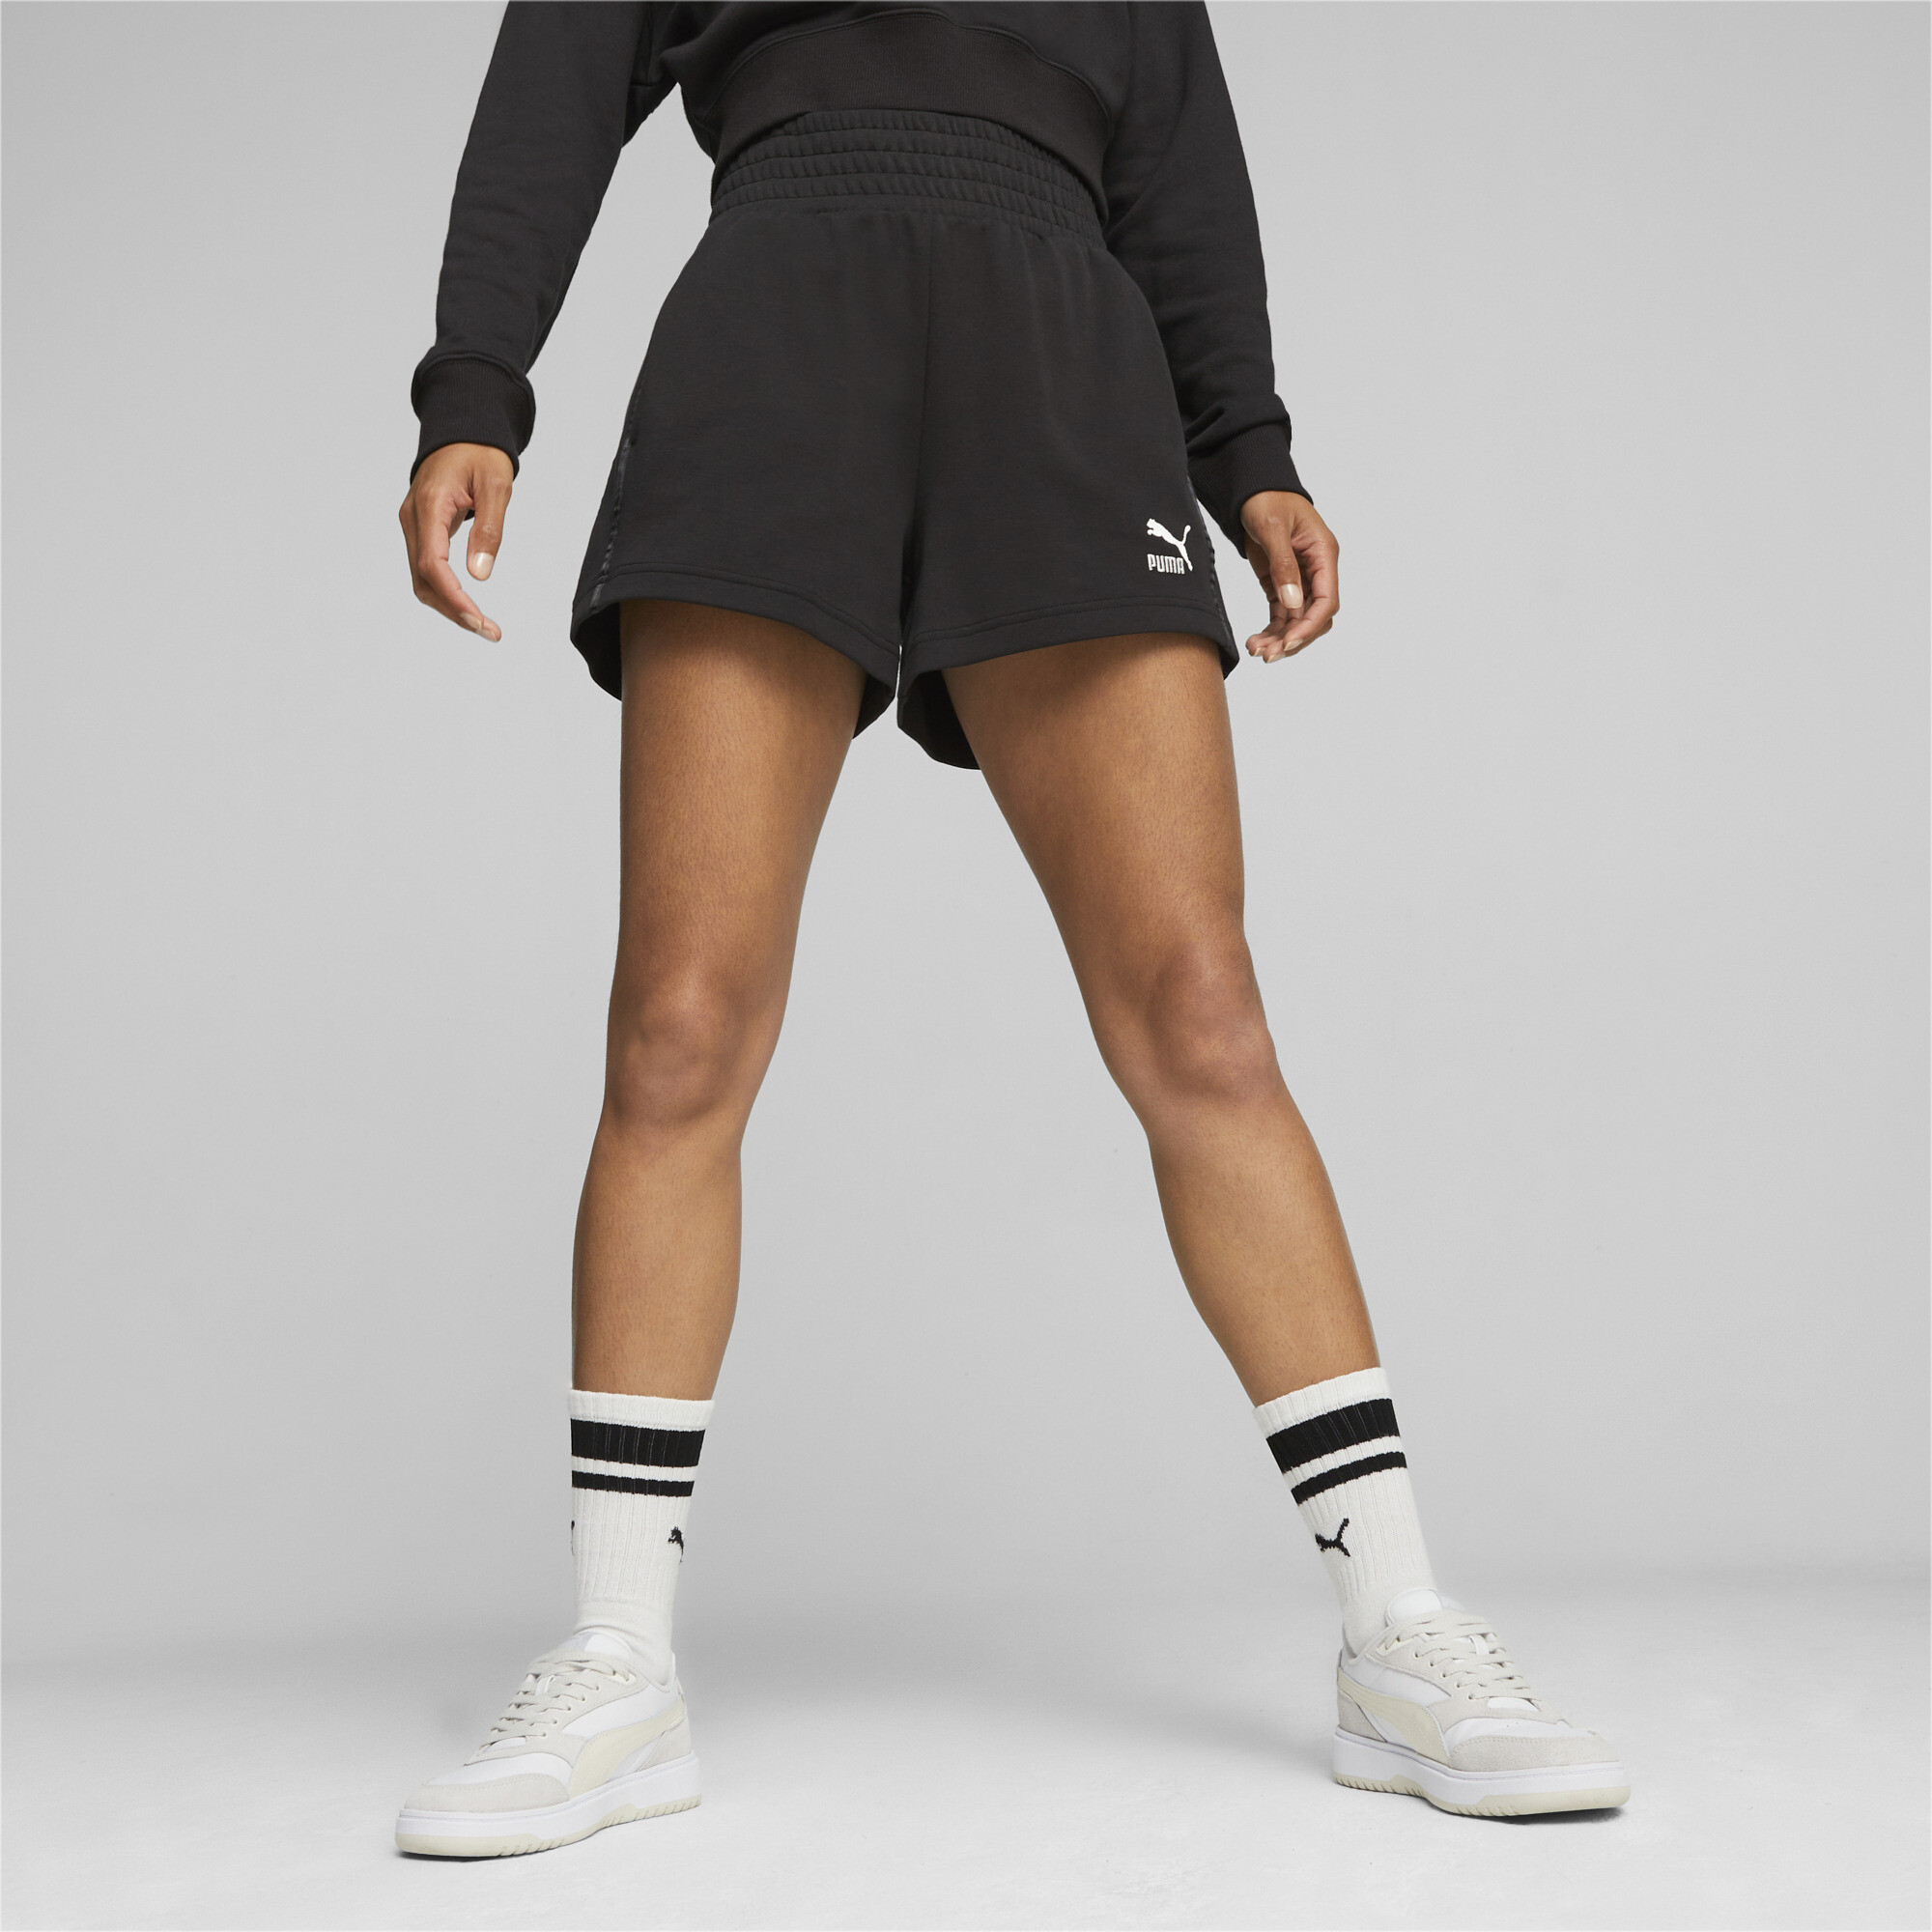 Women's PUMA T7 High Waist Shorts In Black, Size Medium